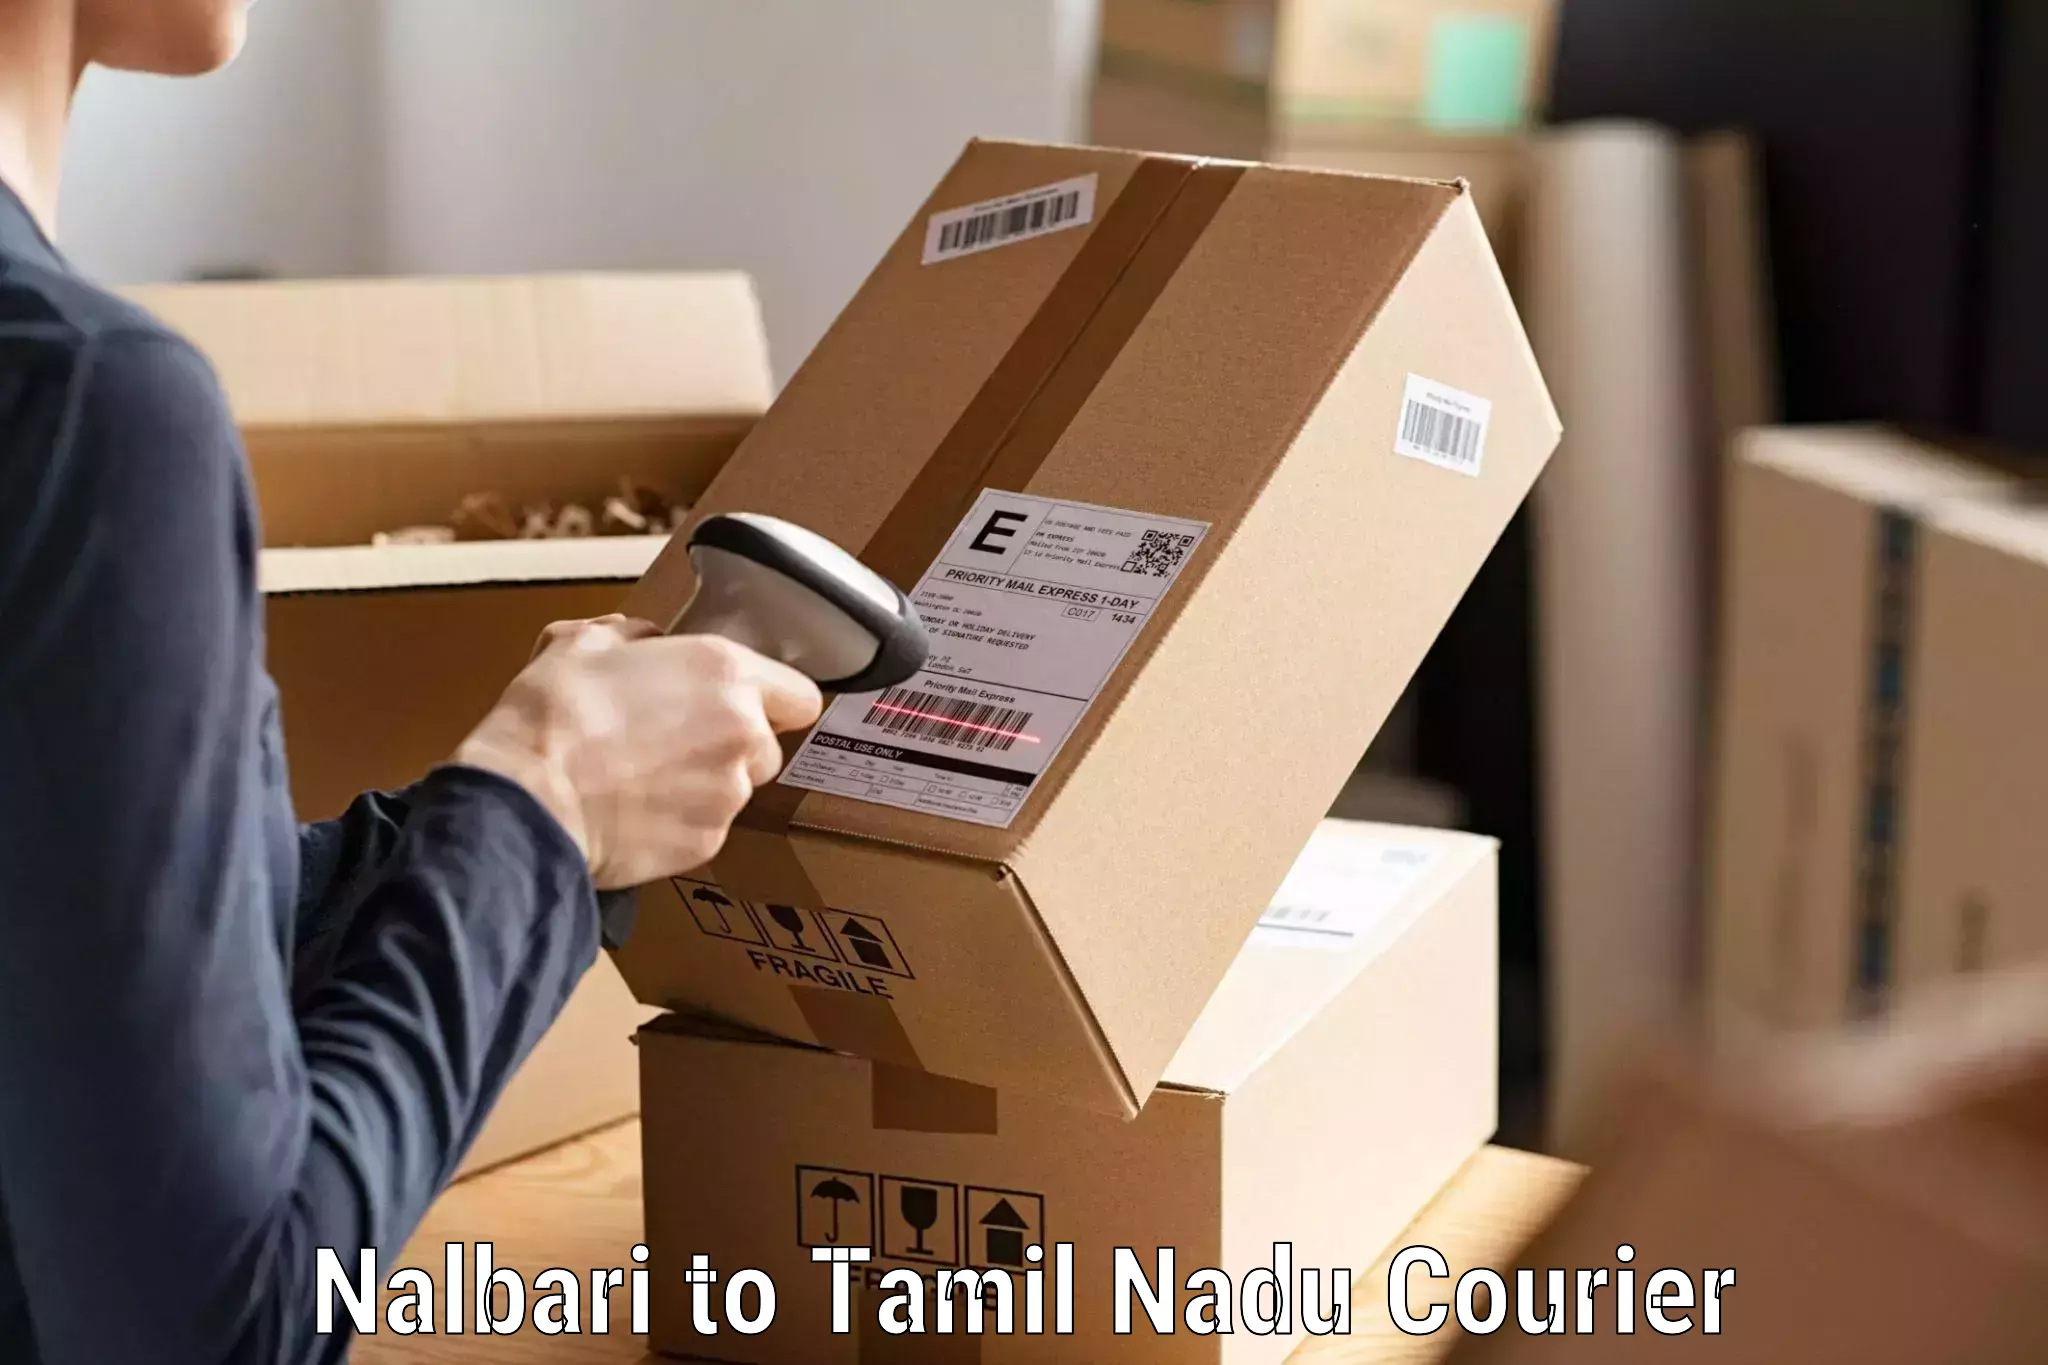 Professional parcel services Nalbari to Ranipet